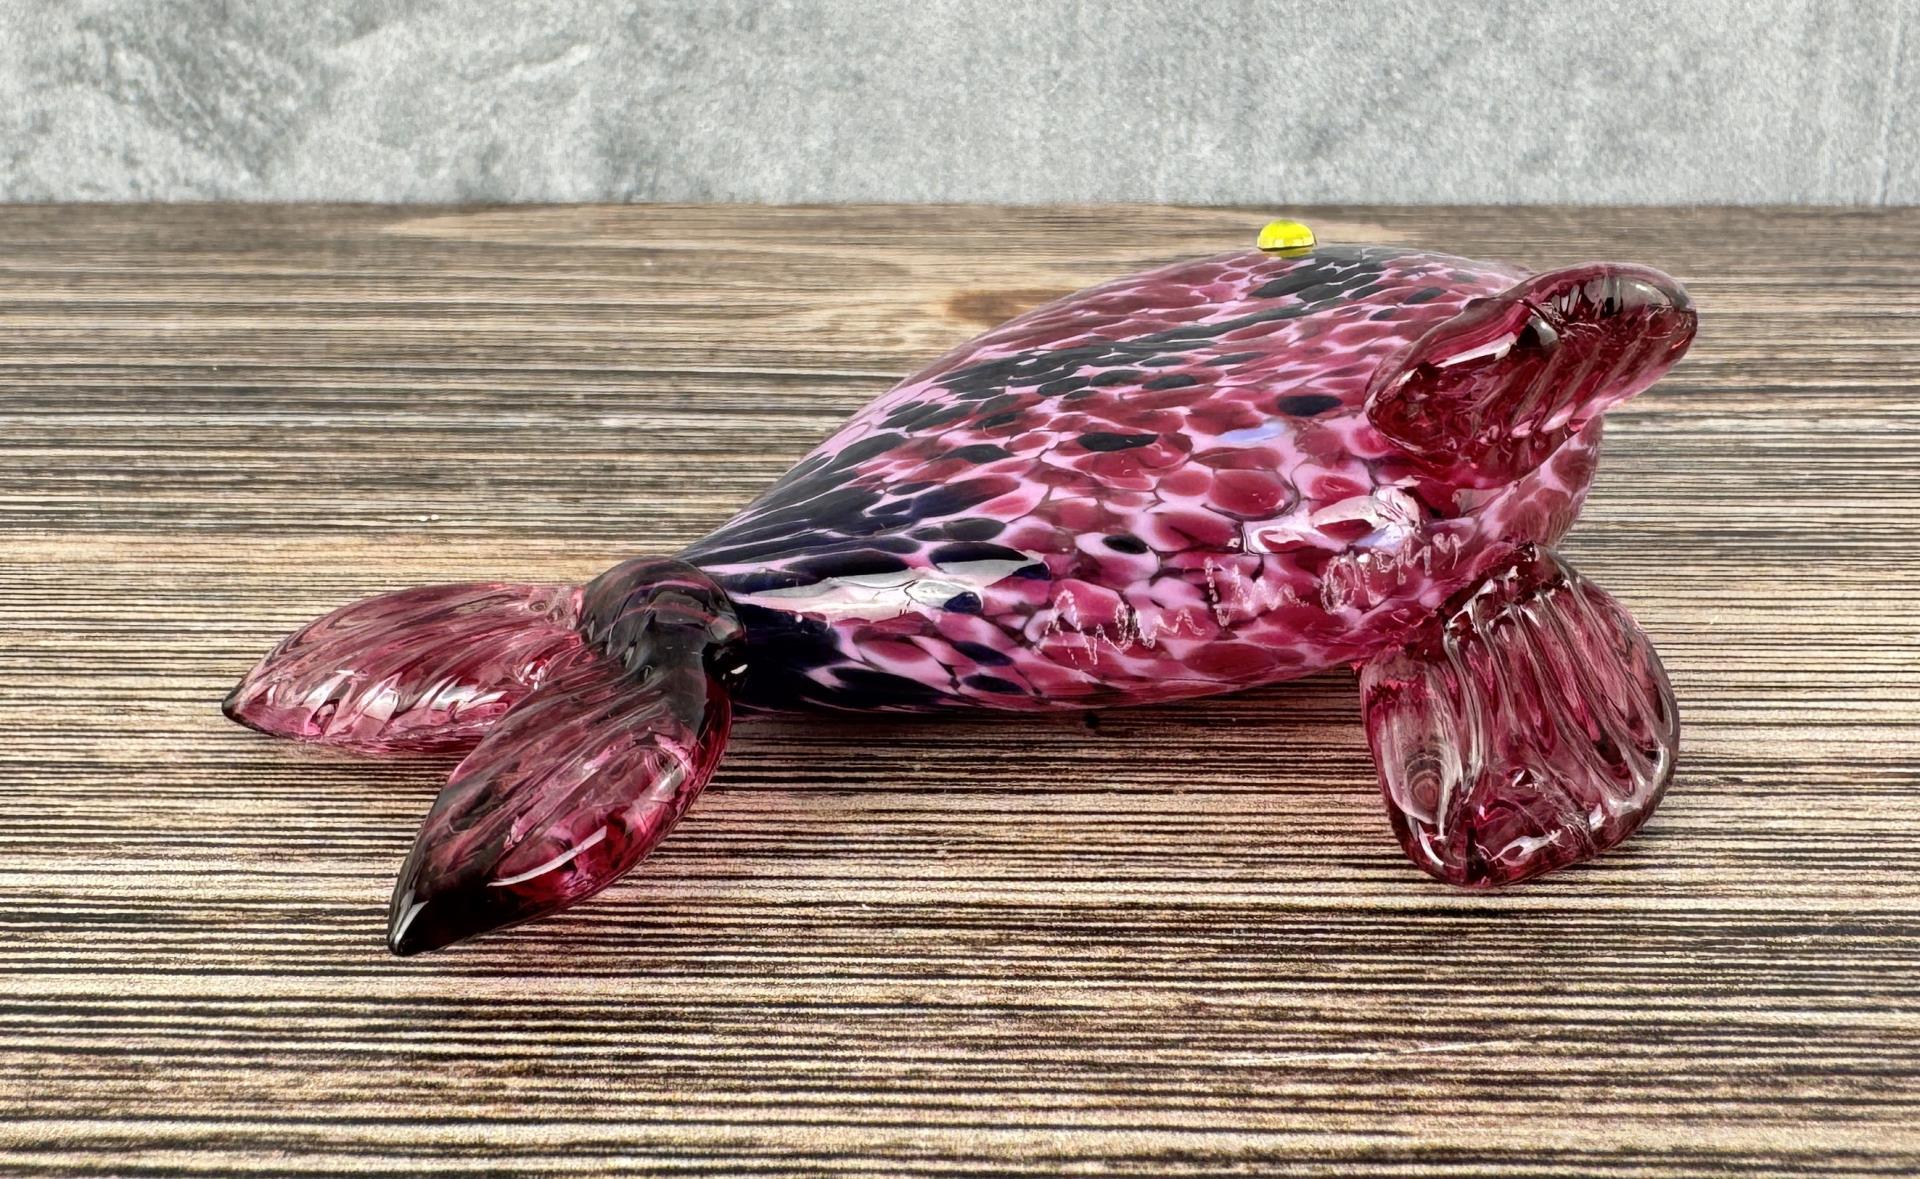 Thames Art Glass Fish Sculpture